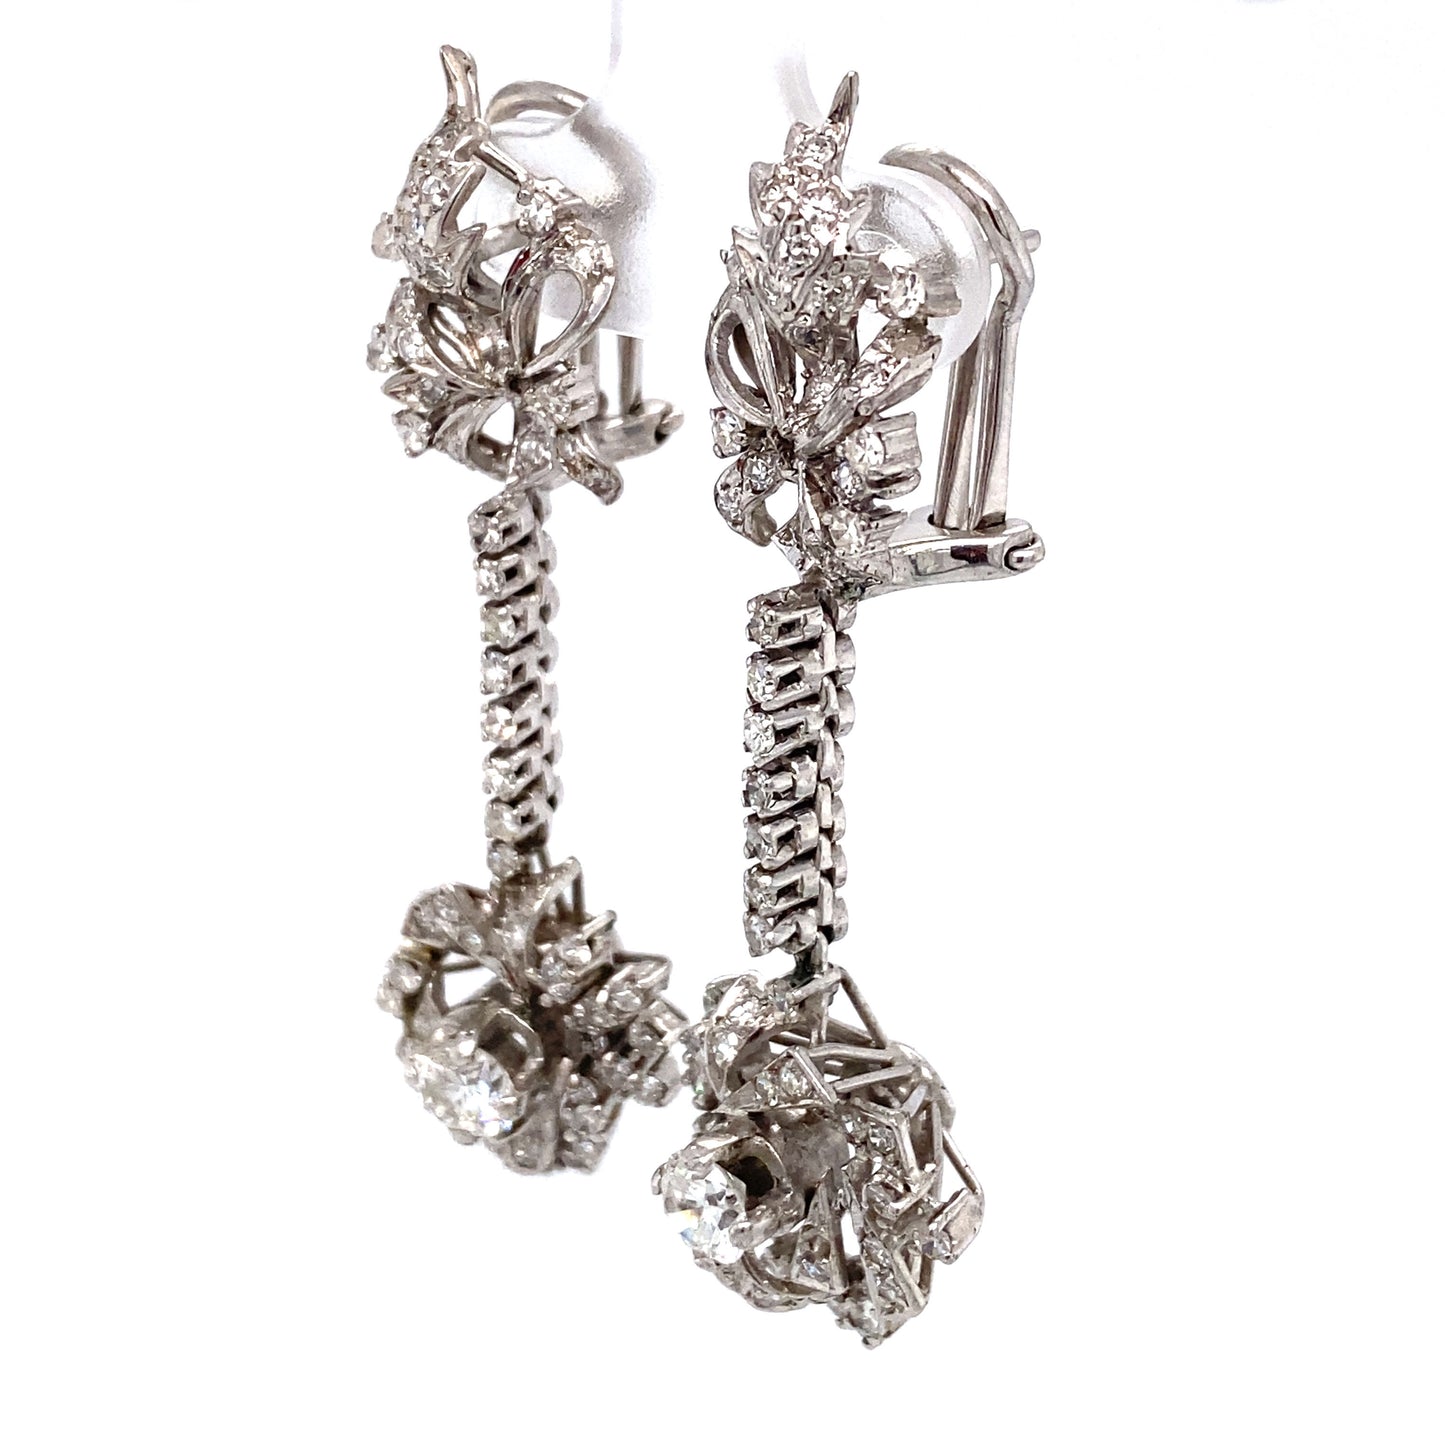 Circa 1930s 4.5 Carat Diamond Dangle Earrings in Platinum